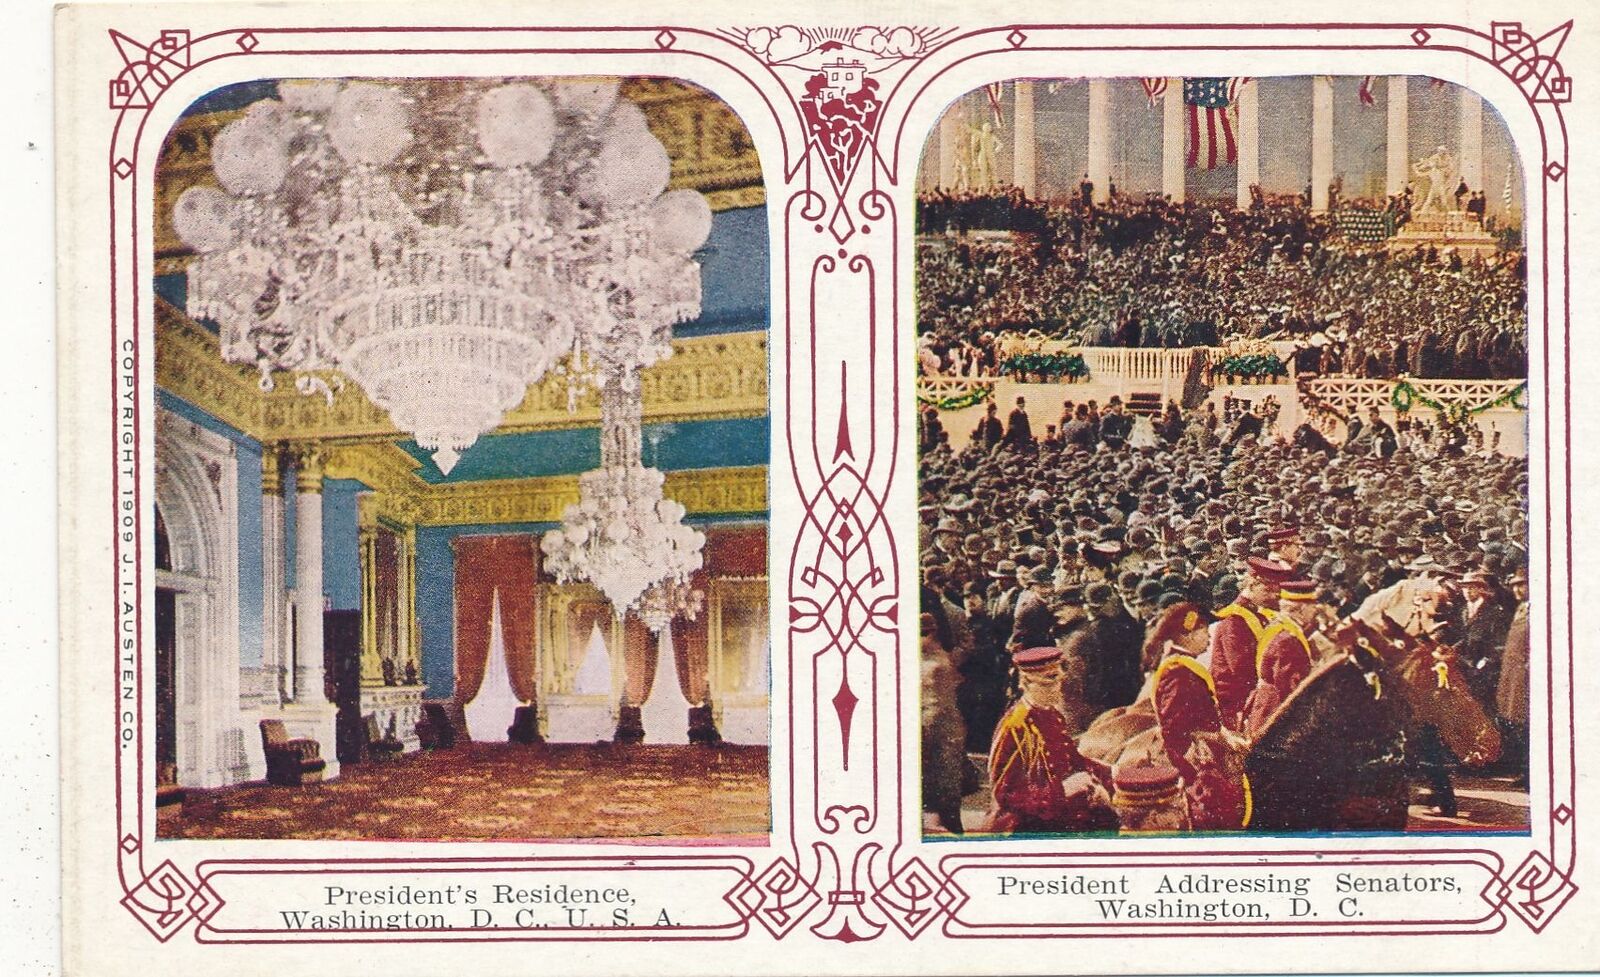 WASHINGTON DC - President's Residence and President Addressing Senators Postcard